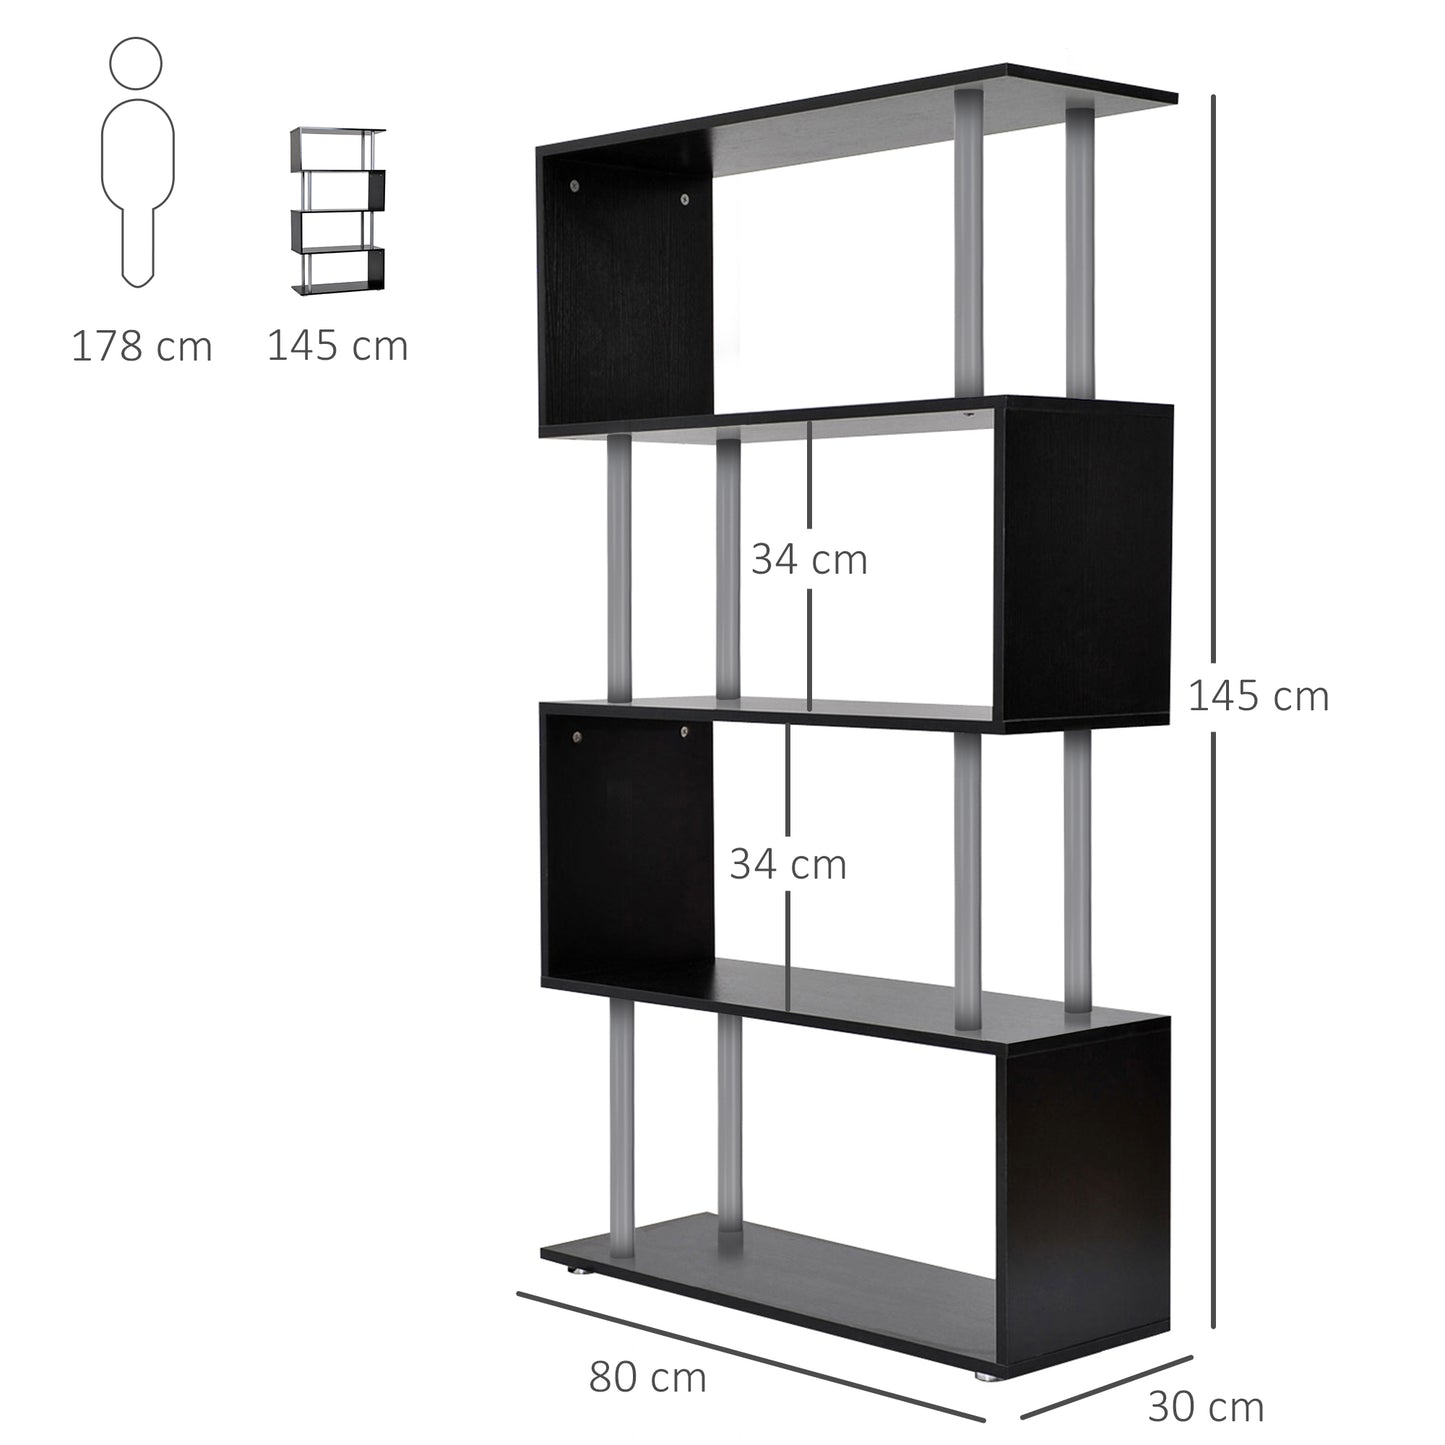 S-Shaped Bookcase, Contemporary Wooden Bookshelf Dividers, Spacious Storage Display Unit, Black, HOMCOM, 3